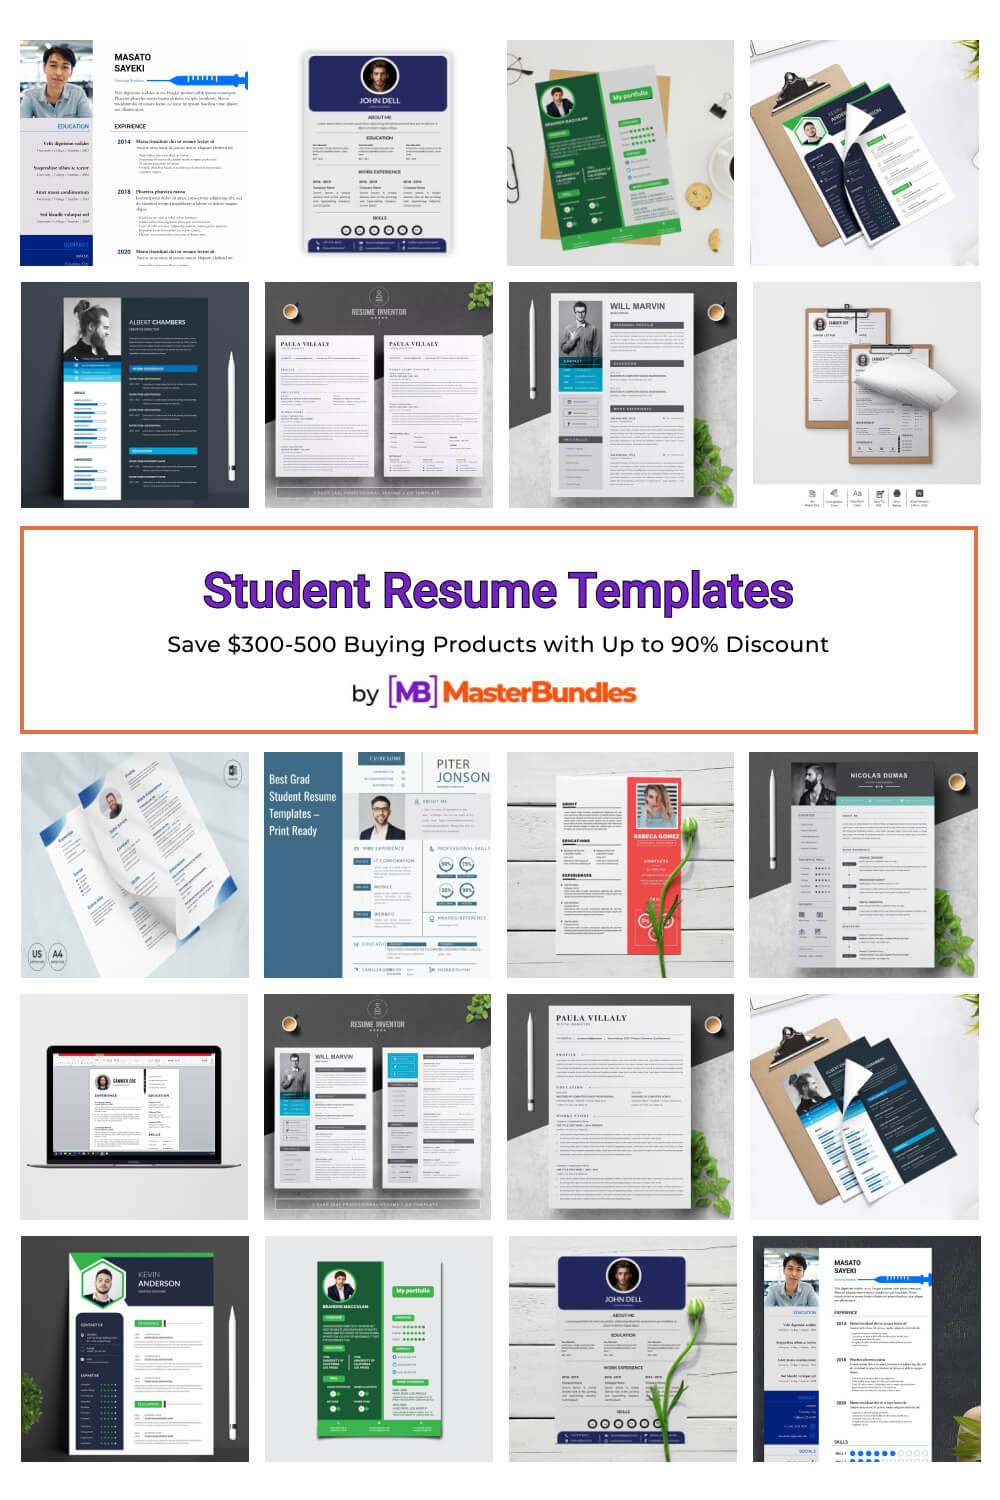 student resume templates pinterest image.